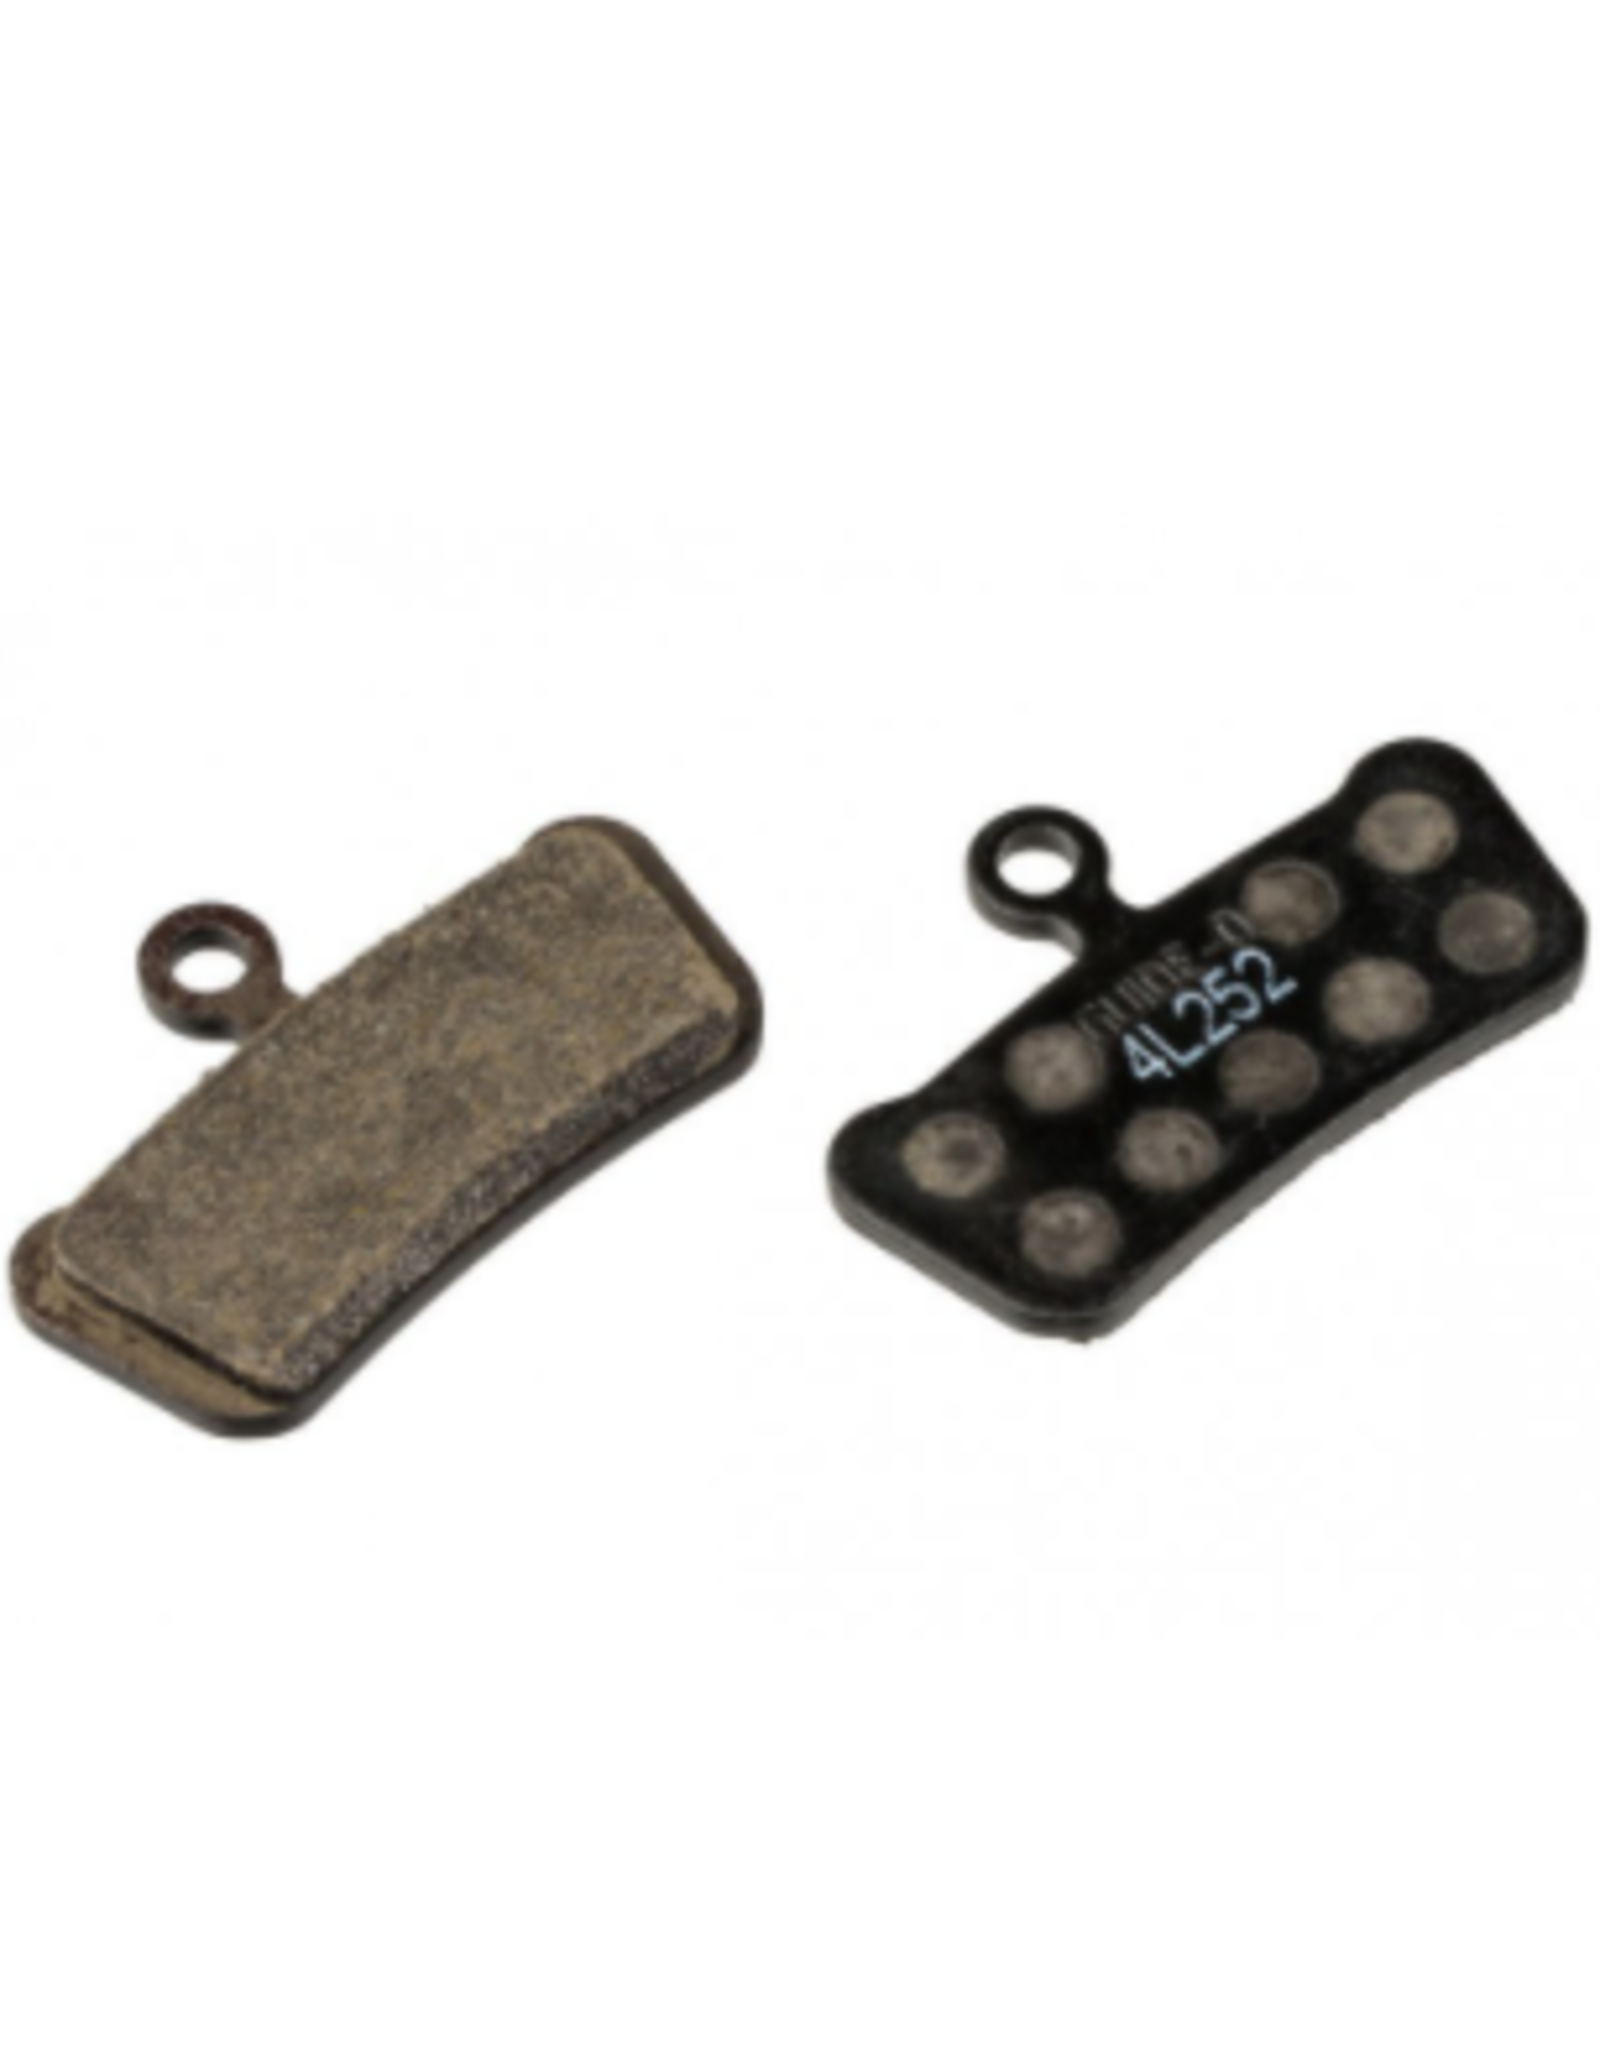 SRAM Brake pads SRAM Trail/Guide org/steel (bulk)